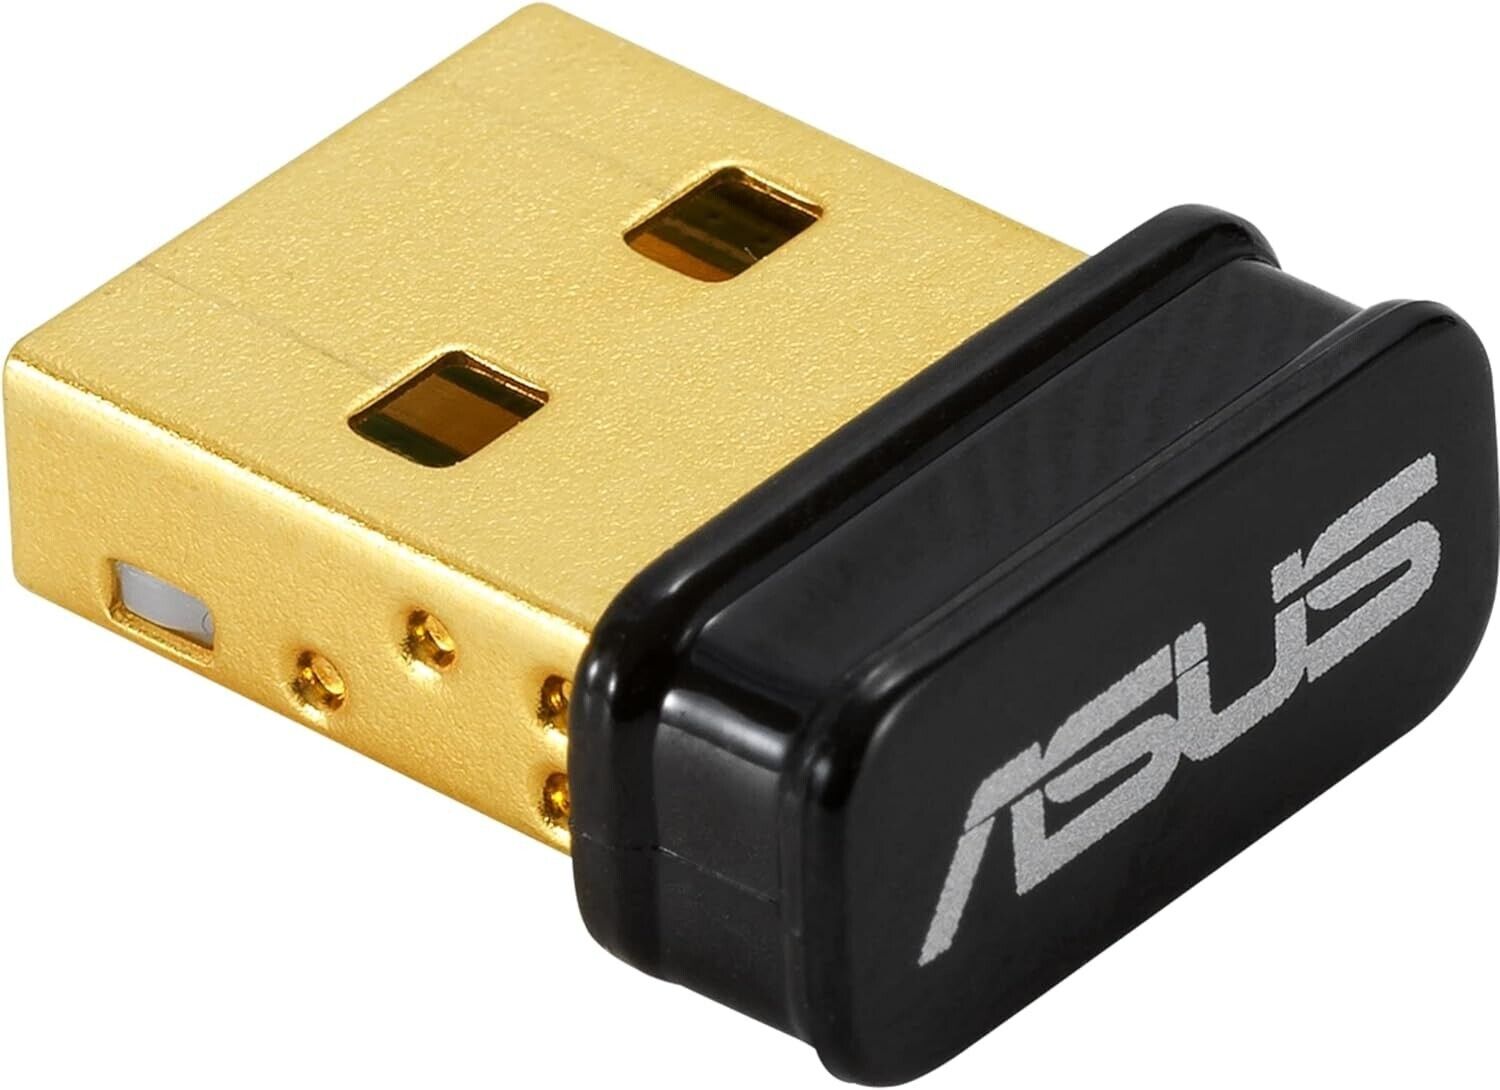 ASUS Bluetooth 5.0 Adapter, Model: USB-BT500 (A248)